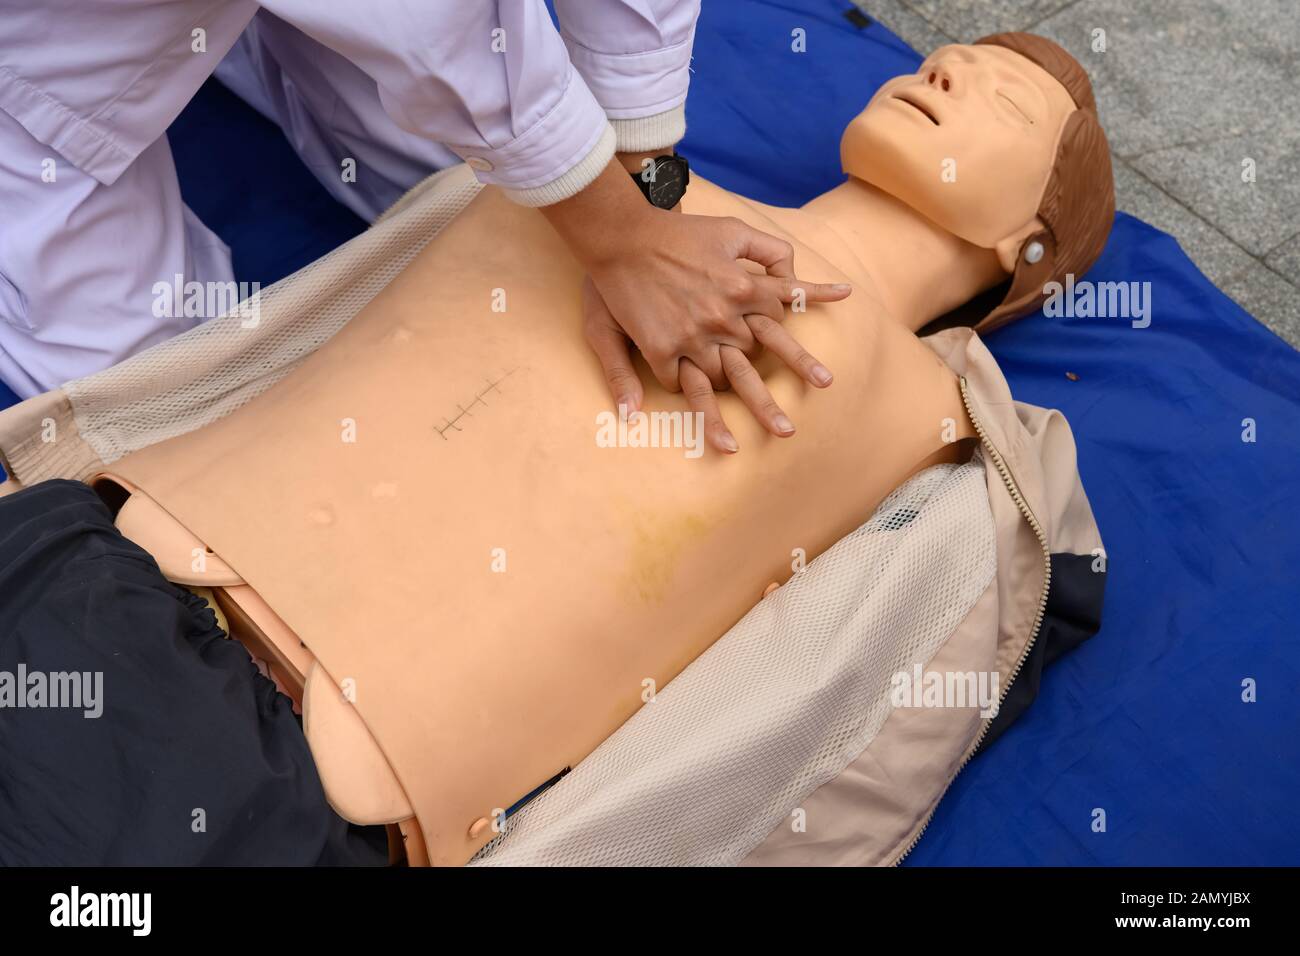 nurse demonstrating cardiopulmonary resuscitation on a dummy human model Stock Photo